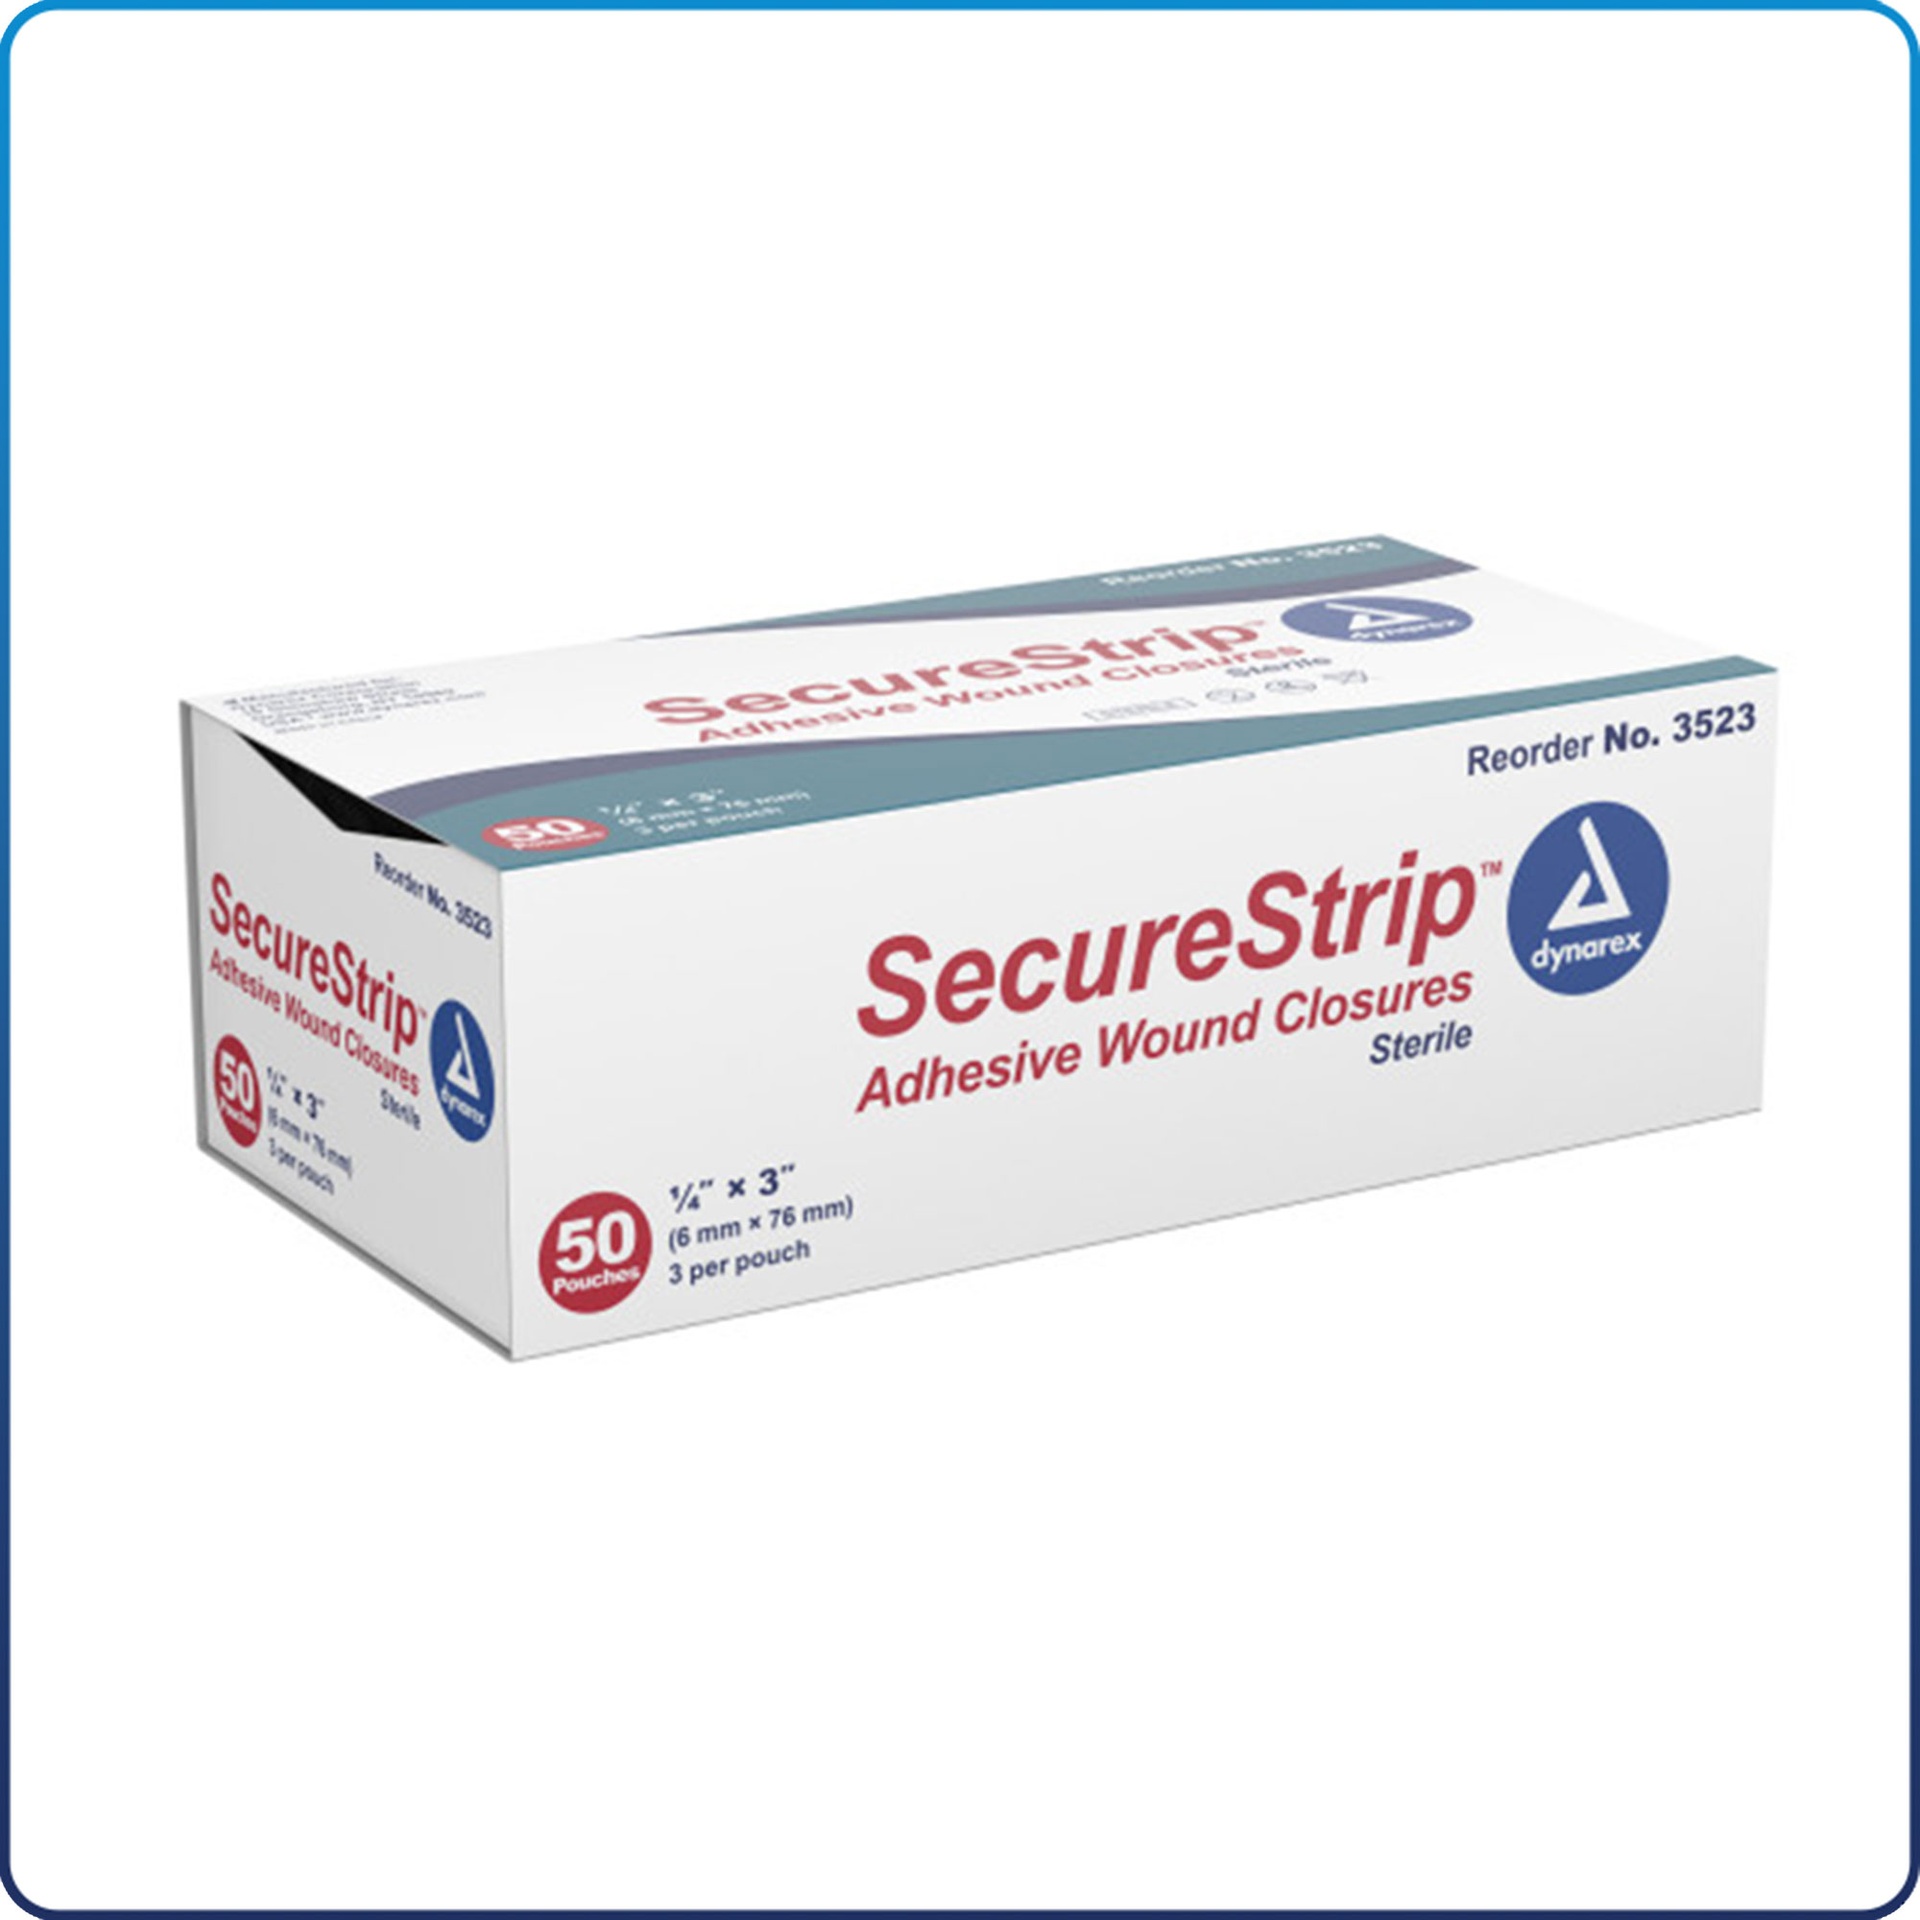 Secure Strip Adhesive Wound Closures 50/Box